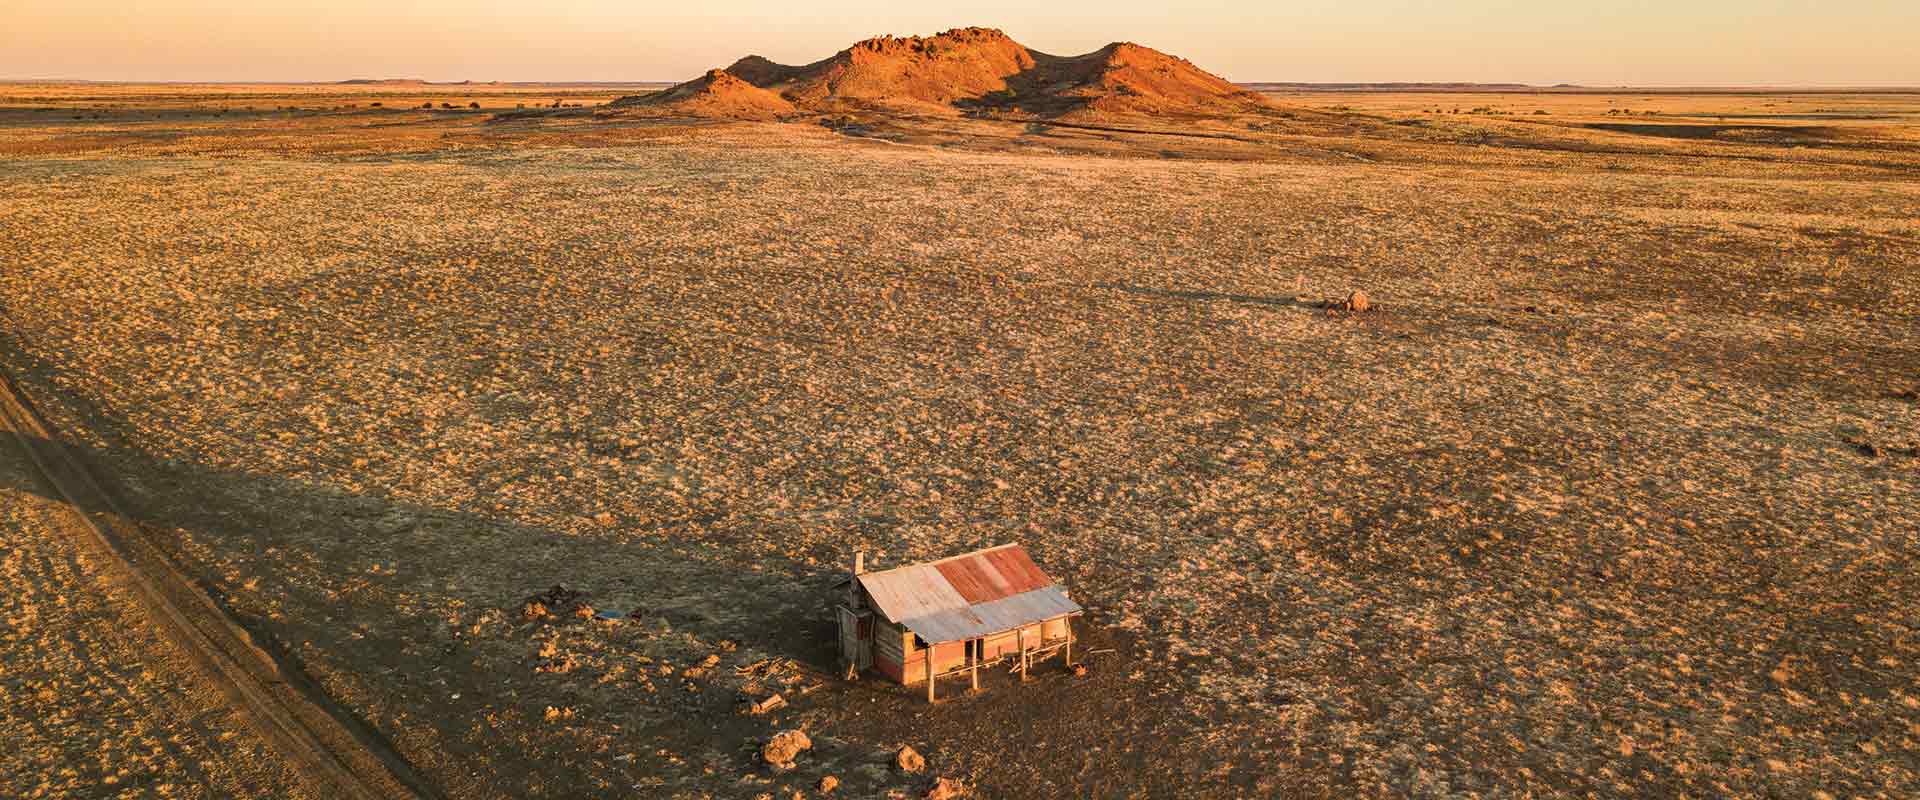 winton aerial landscape hut rocky mesa sunset